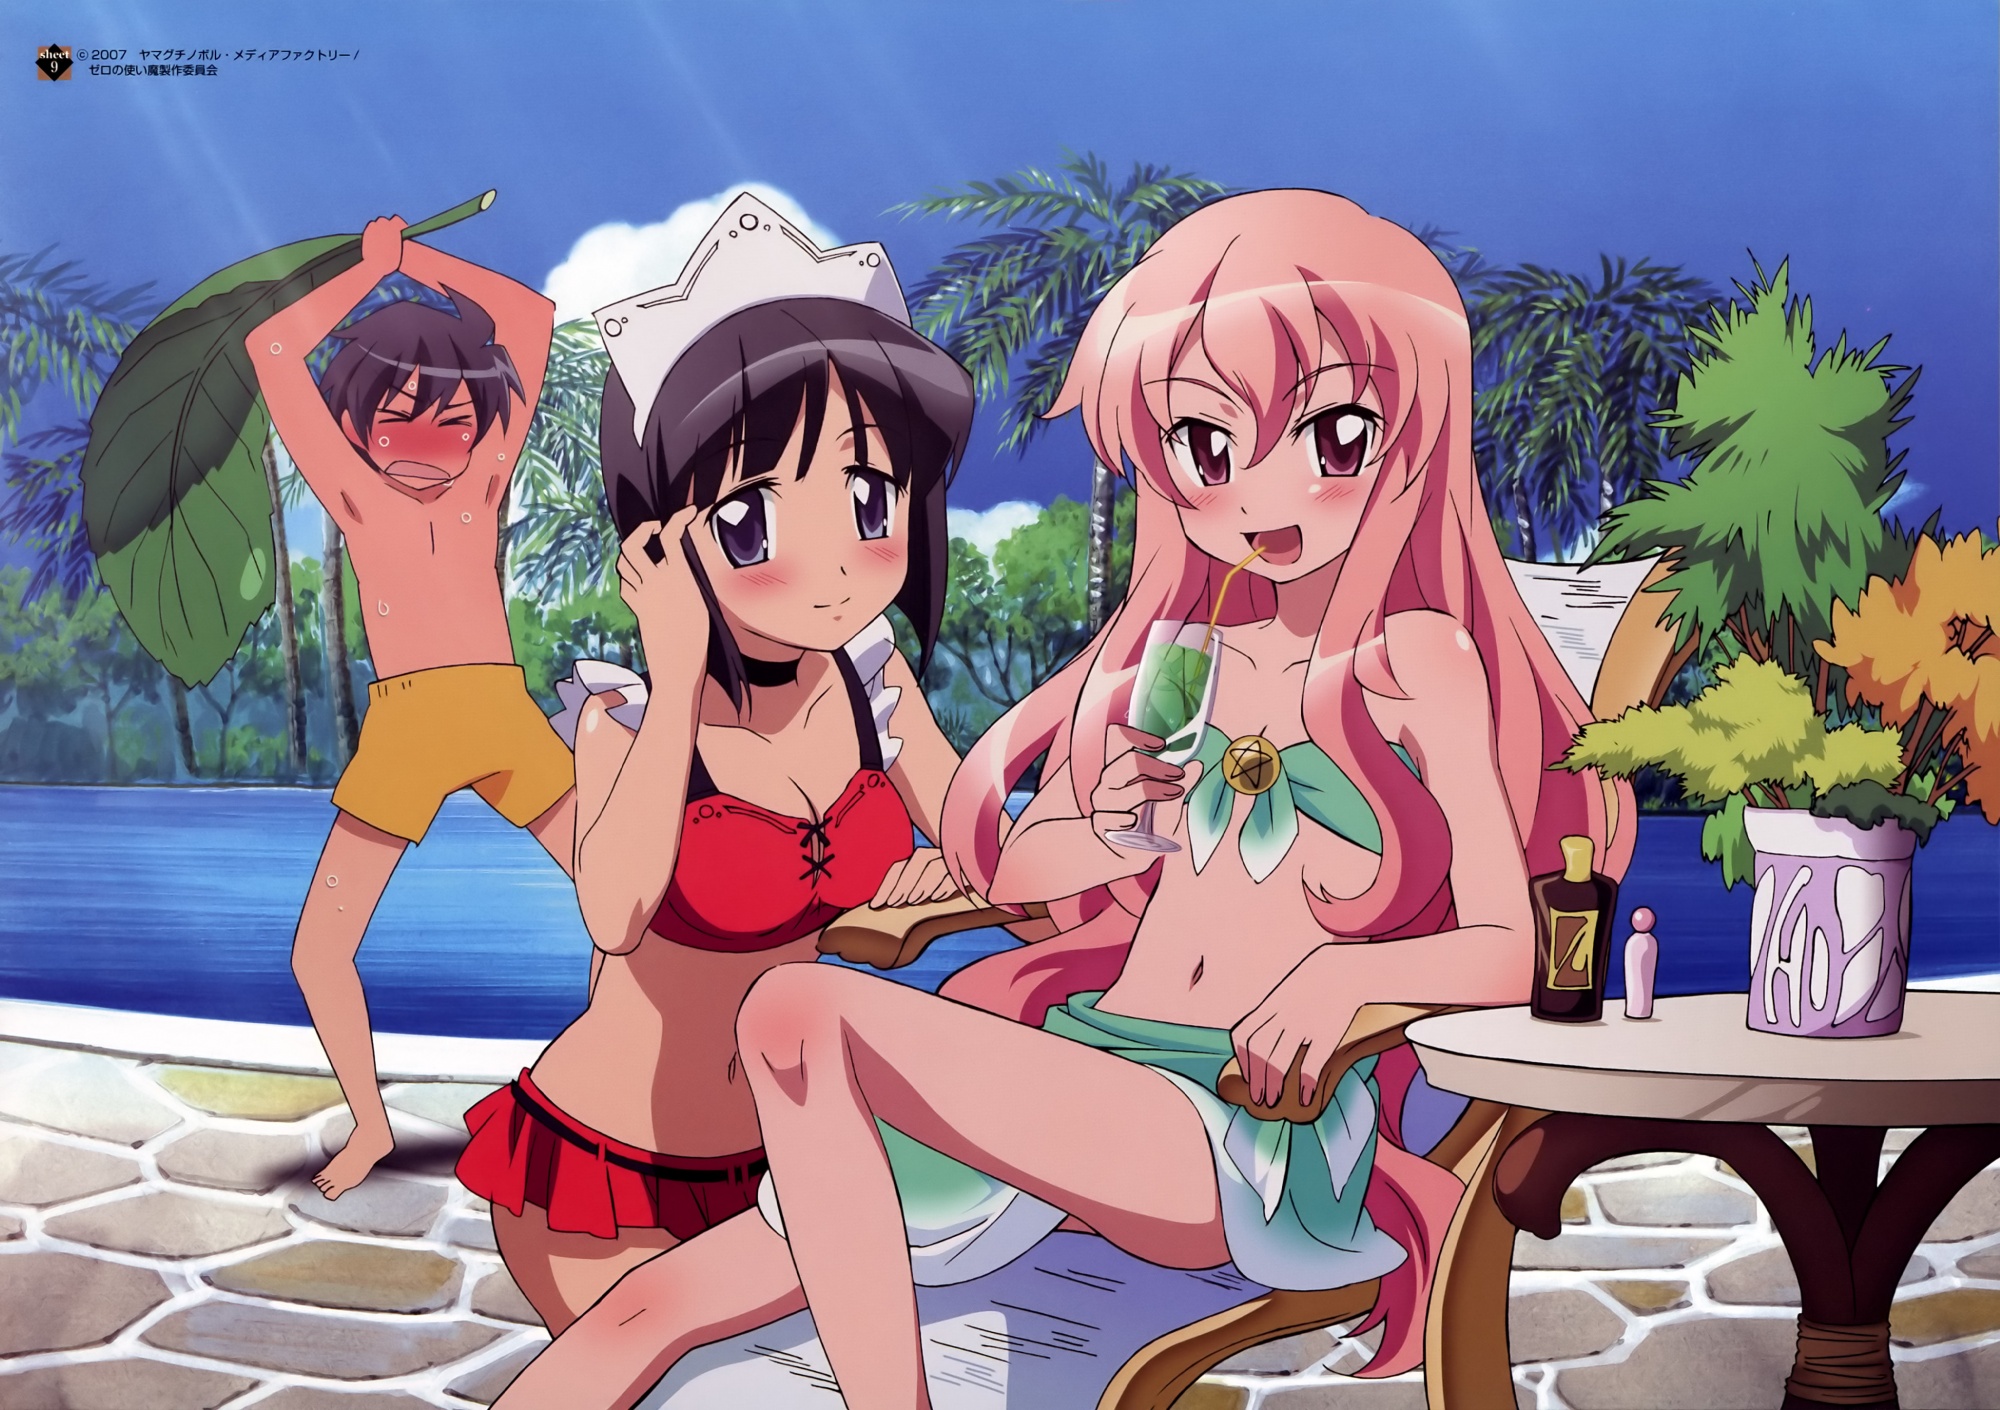 Anime desktop wallpaper featuring characters from Zero no Tsukaima.